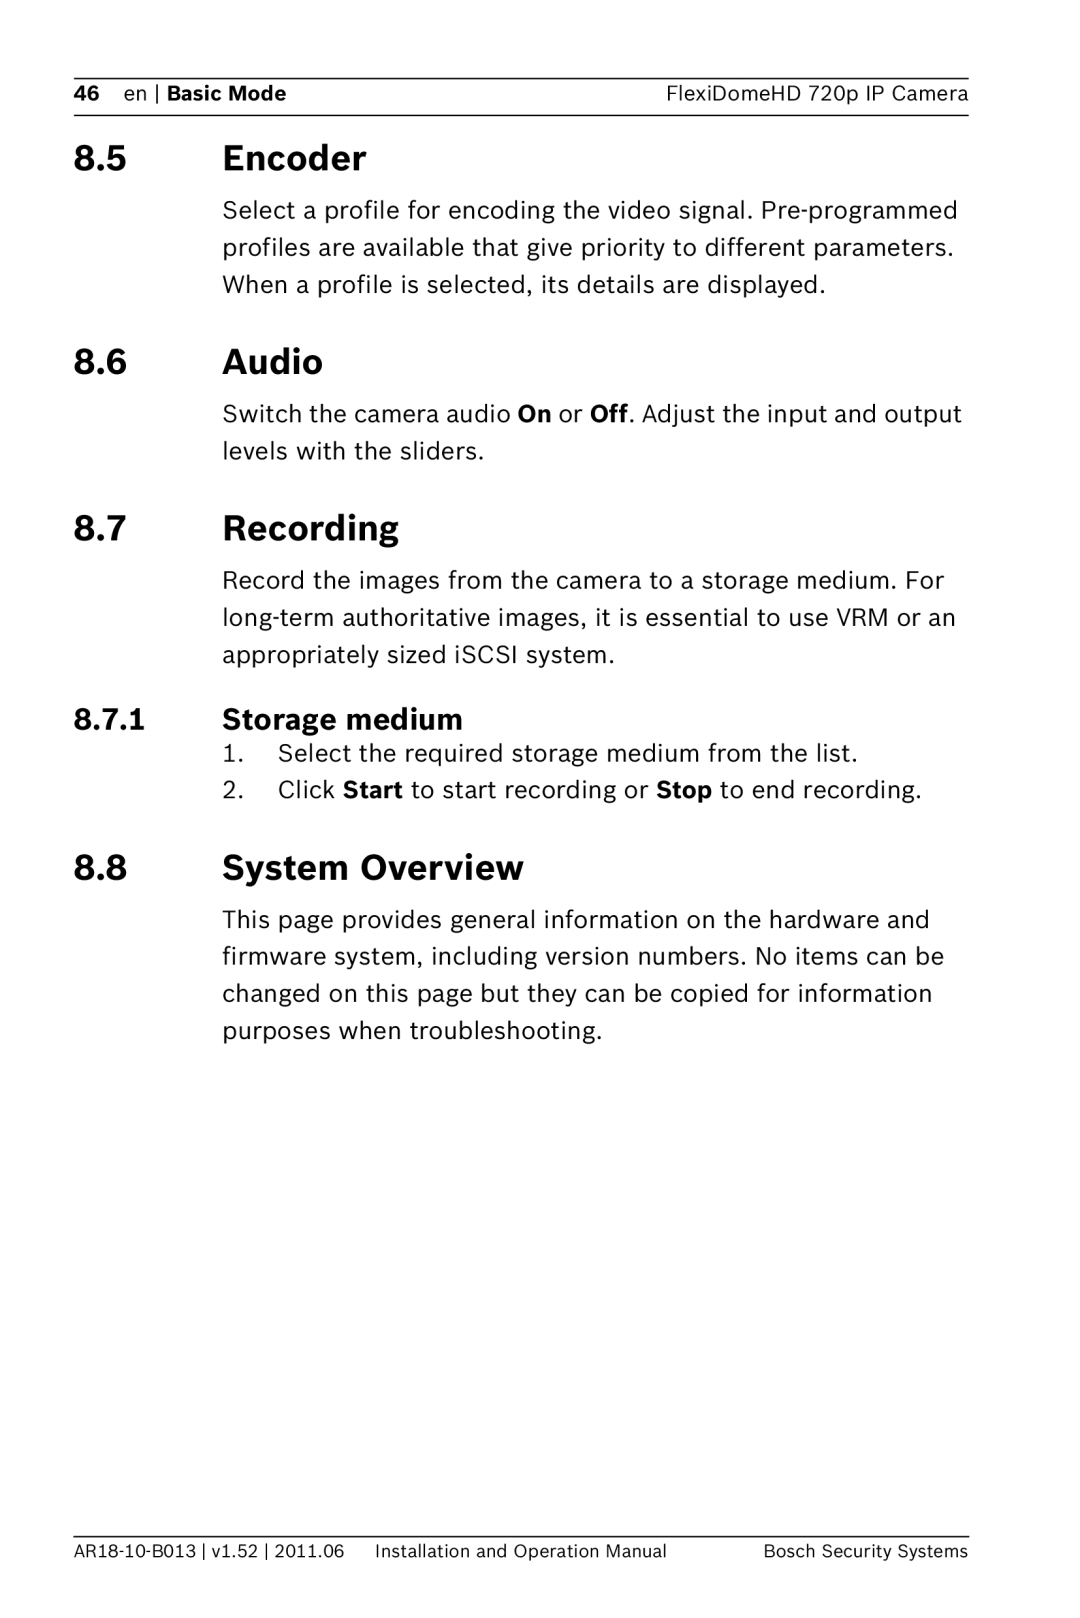 Bosch Appliances NDN-921 operation manual 8.5Encoder, 8.6Audio, 8.7Recording, 8.8System Overview, 8.7.1Storage medium 